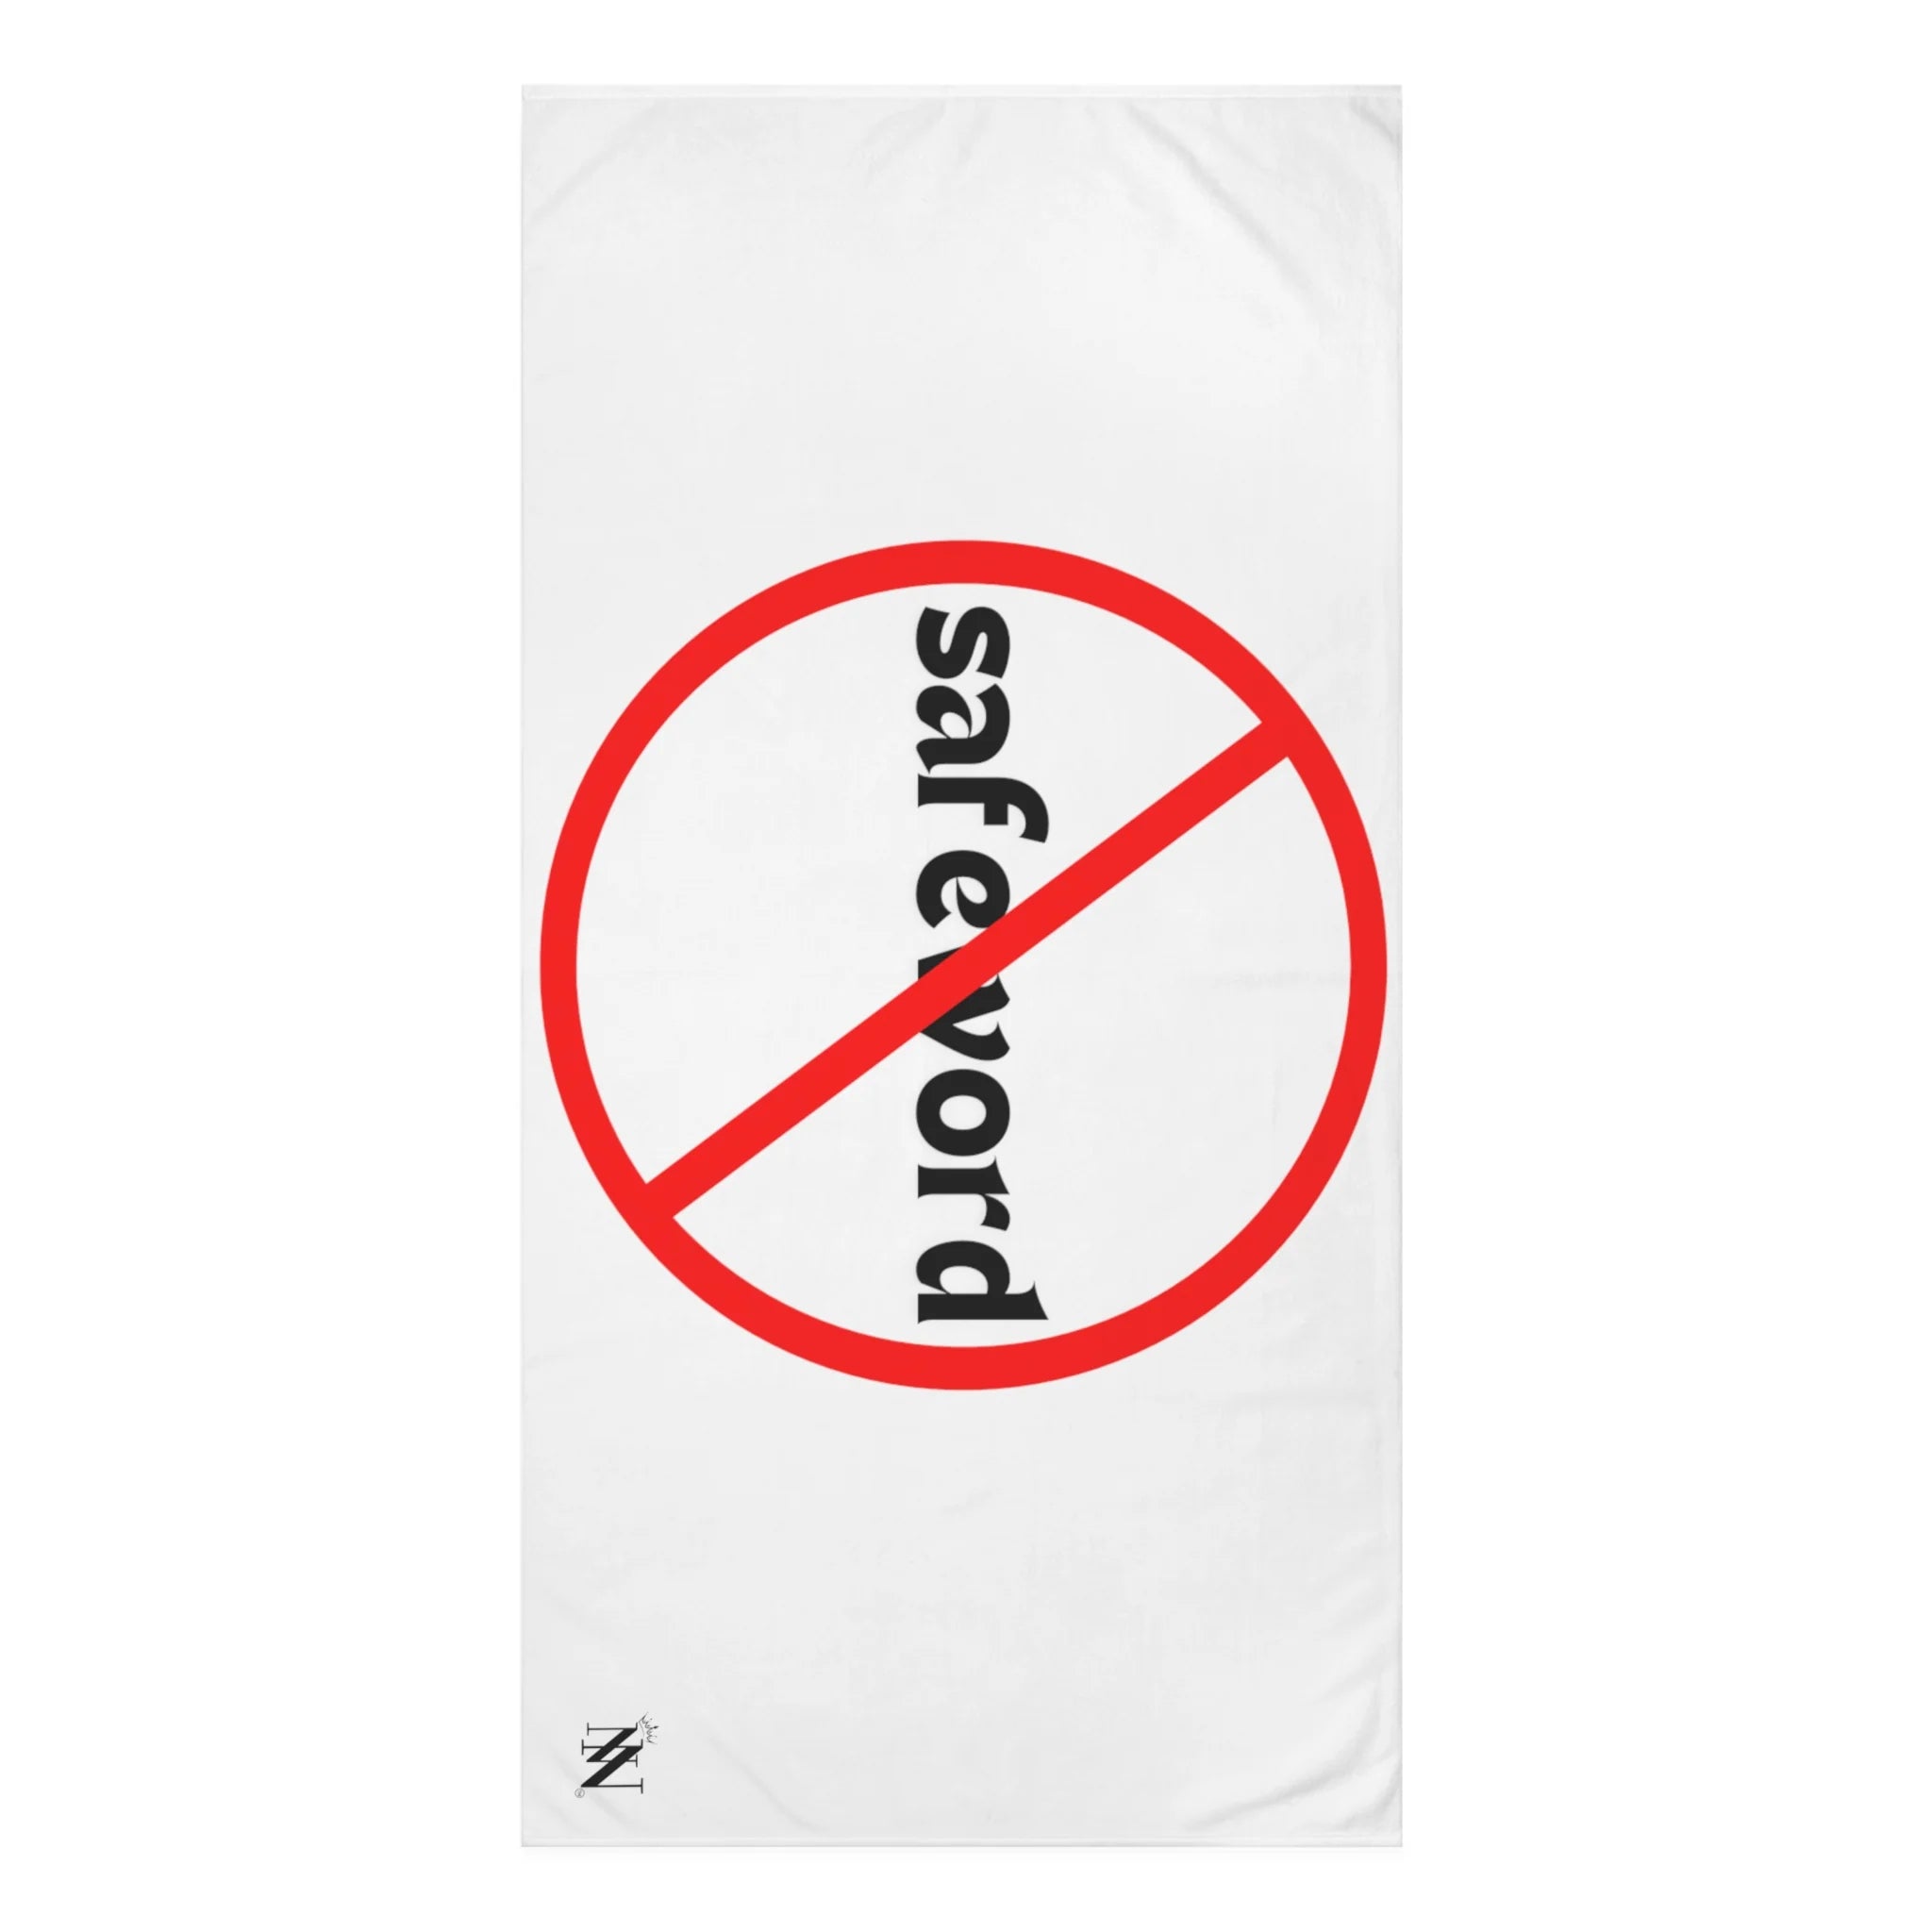 No safe word sex towel